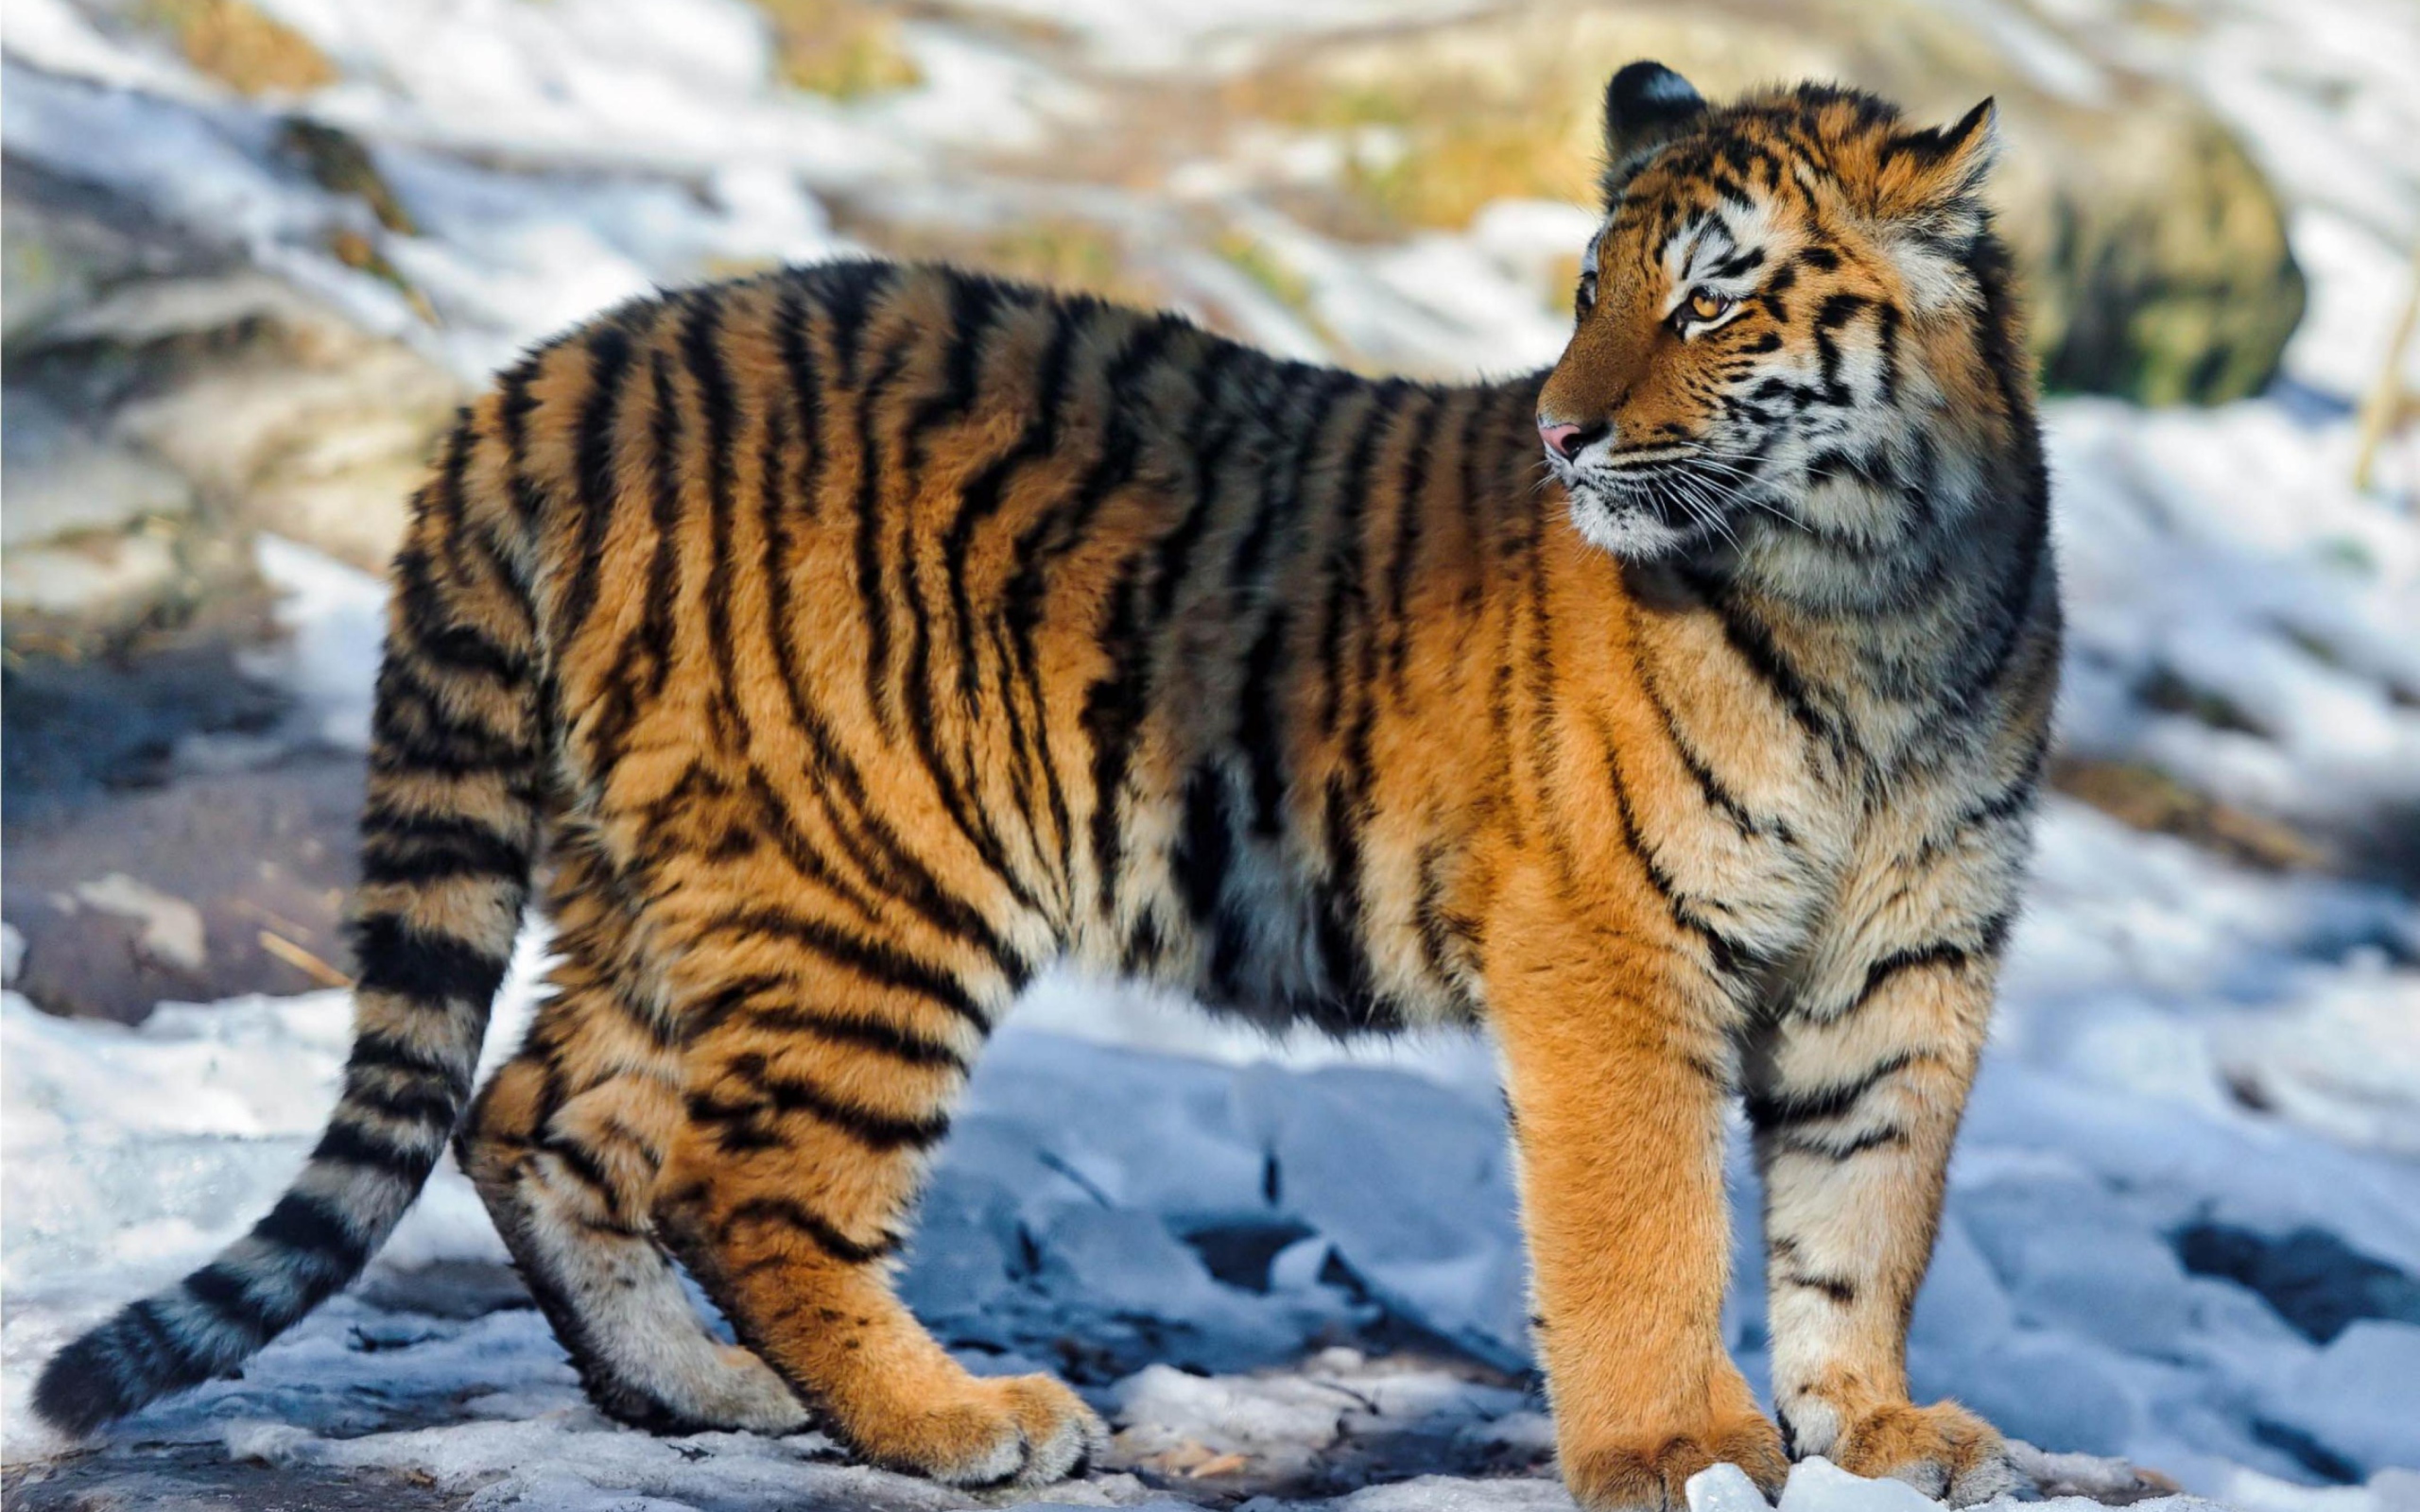 Tiger in Snow wallpaper 2560x1600